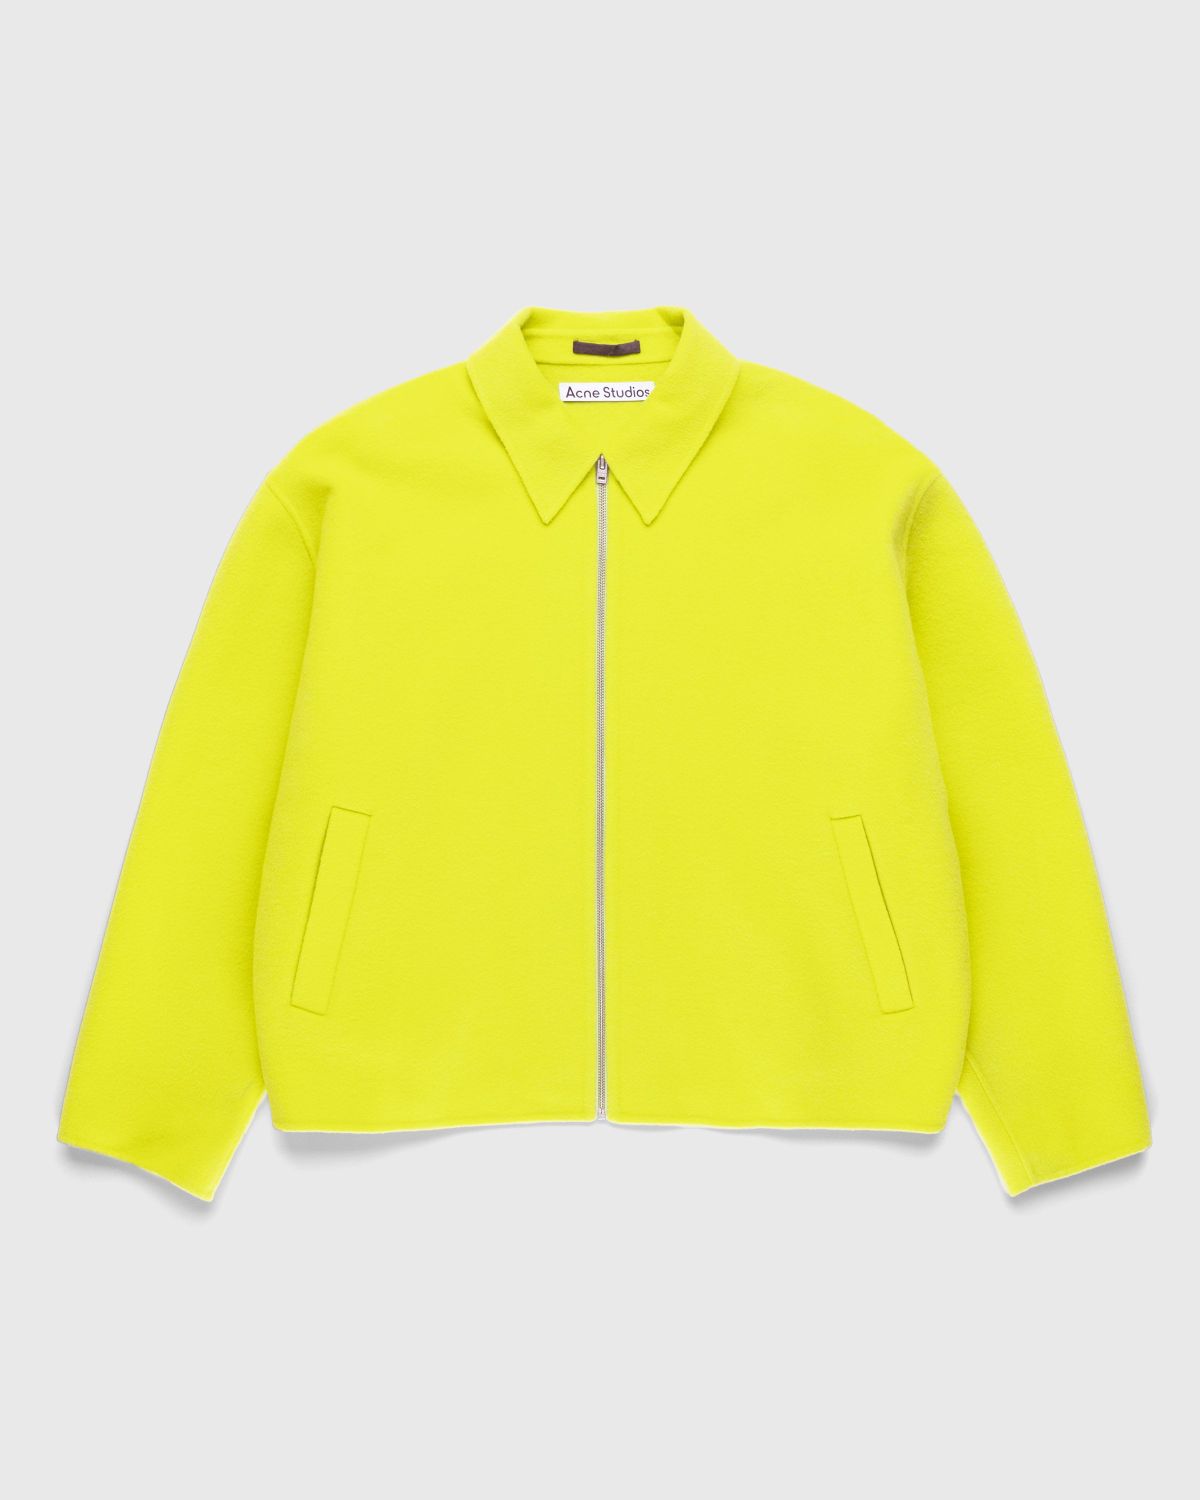 Acne Studios – Wool Zipper Jacket Lime Green - Jackets - Green - Image 1